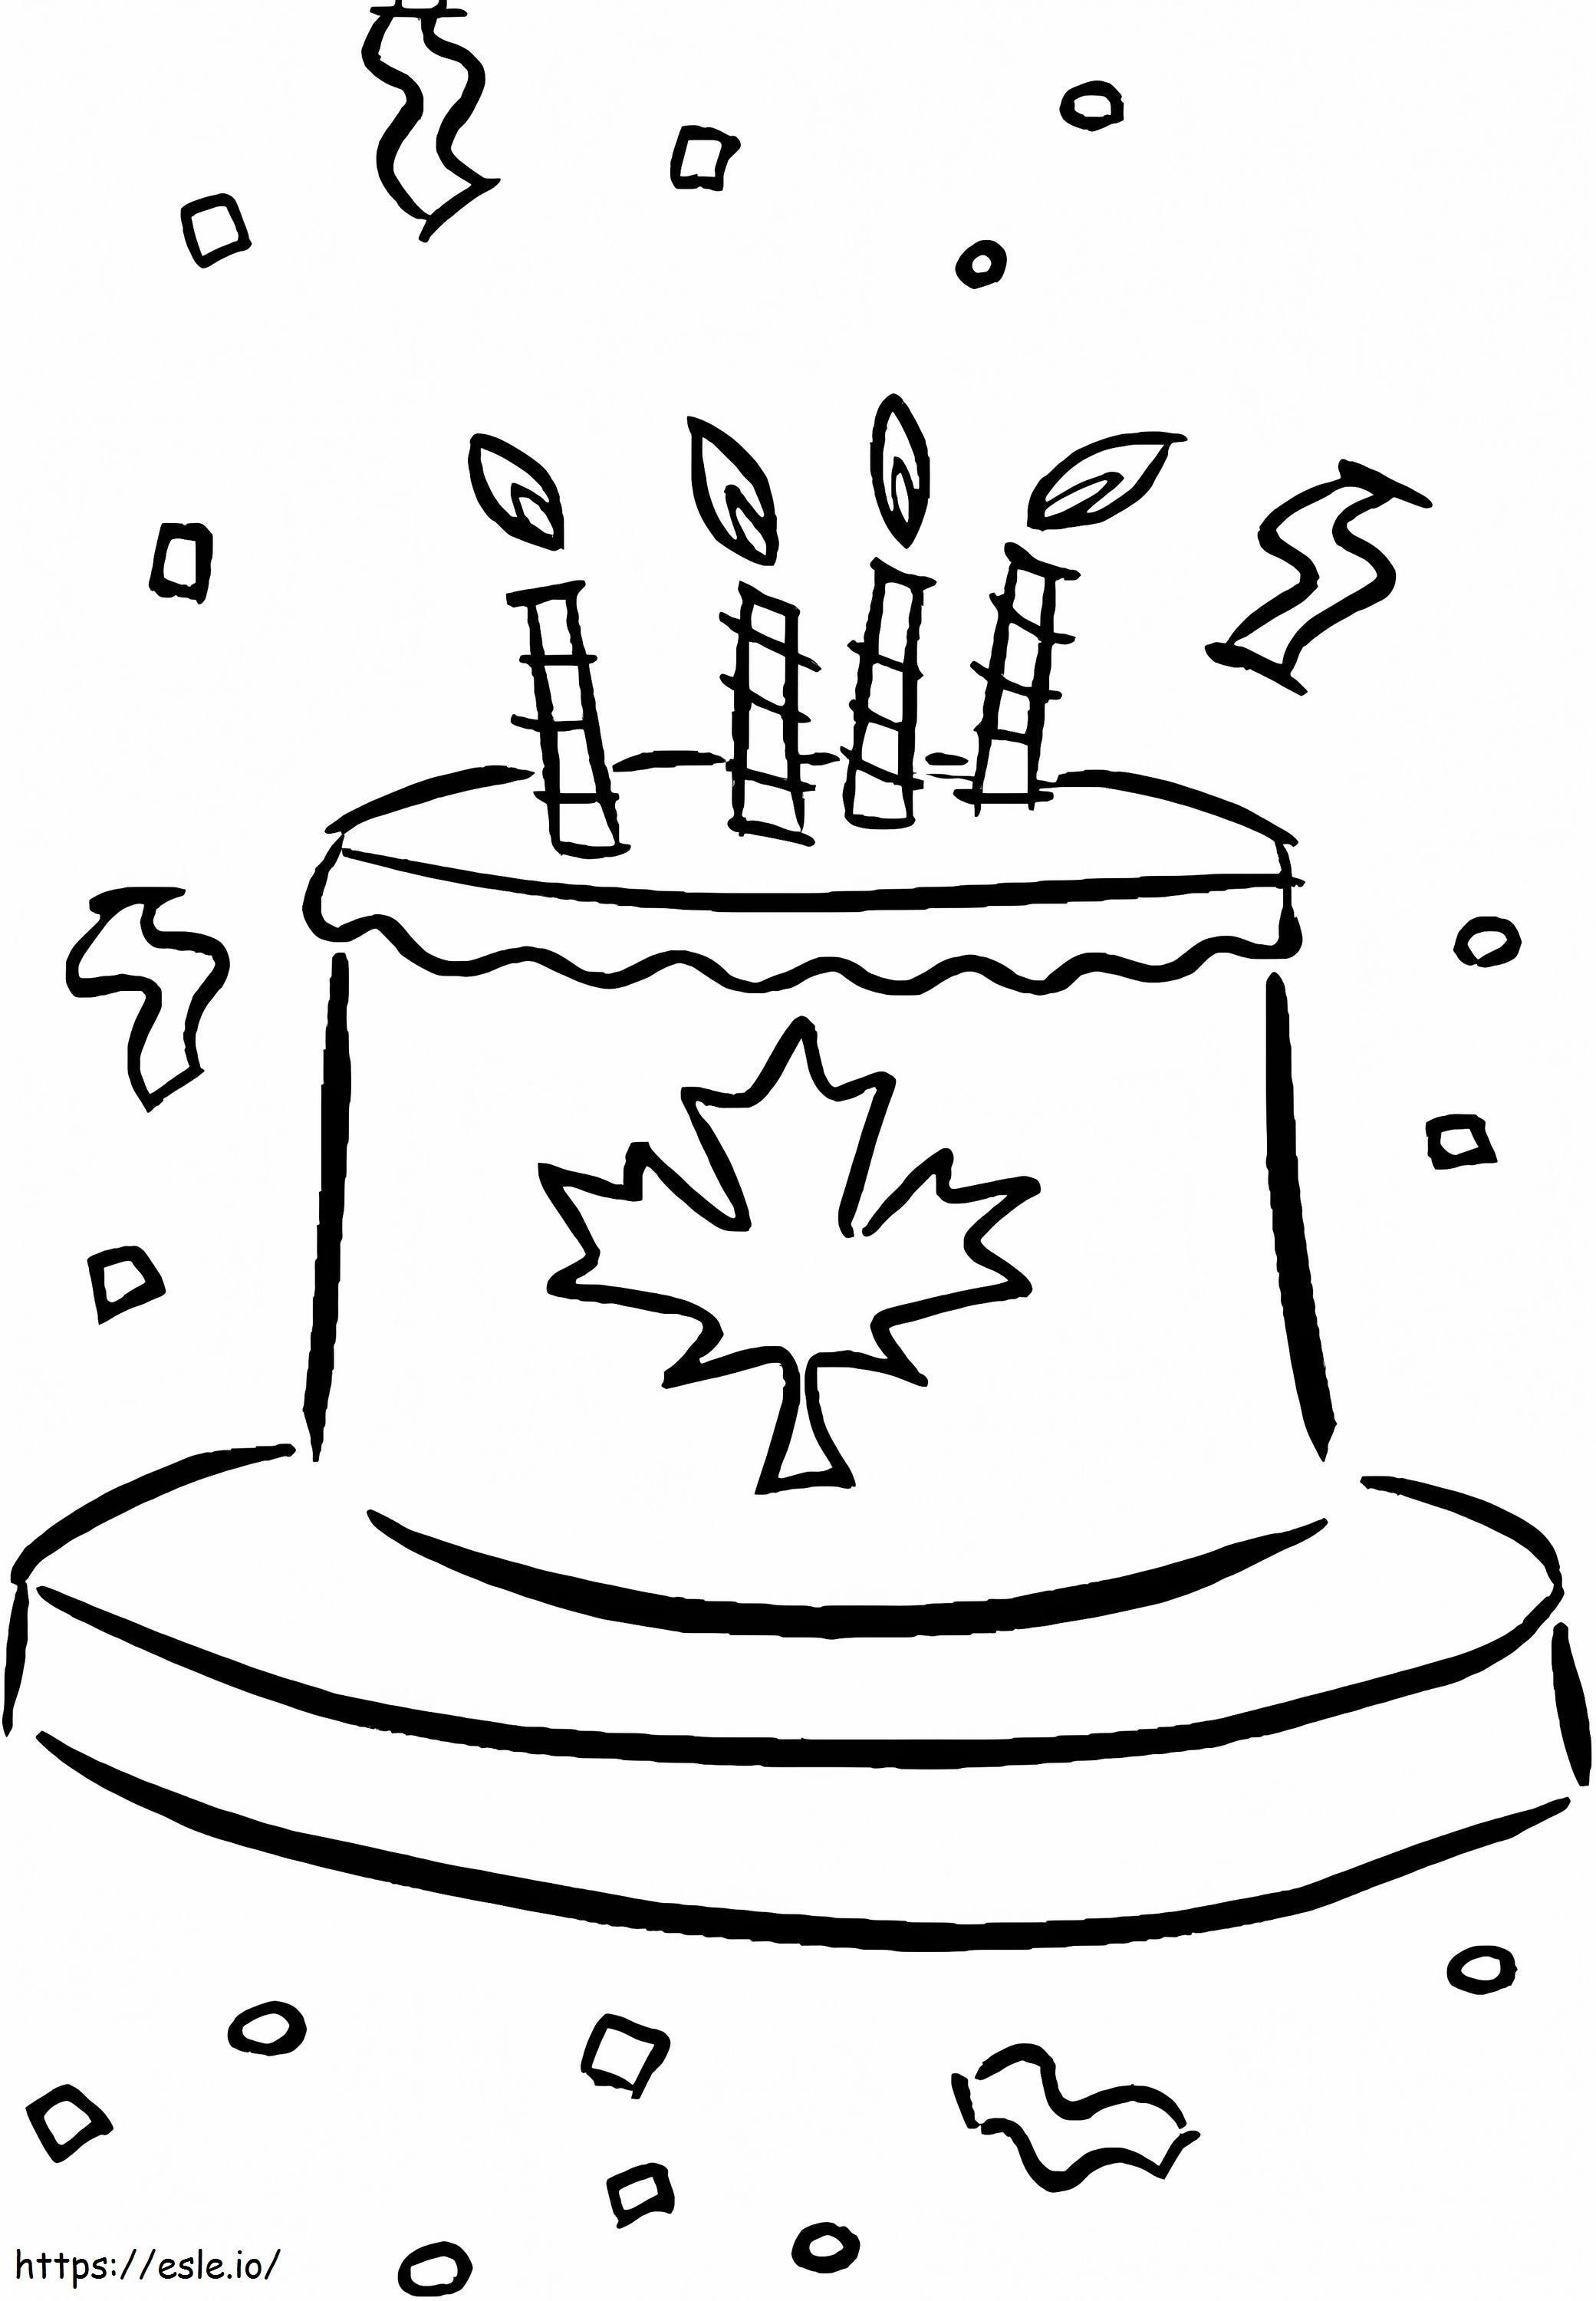 Kuchen zum Kanada-Tag ausmalbilder